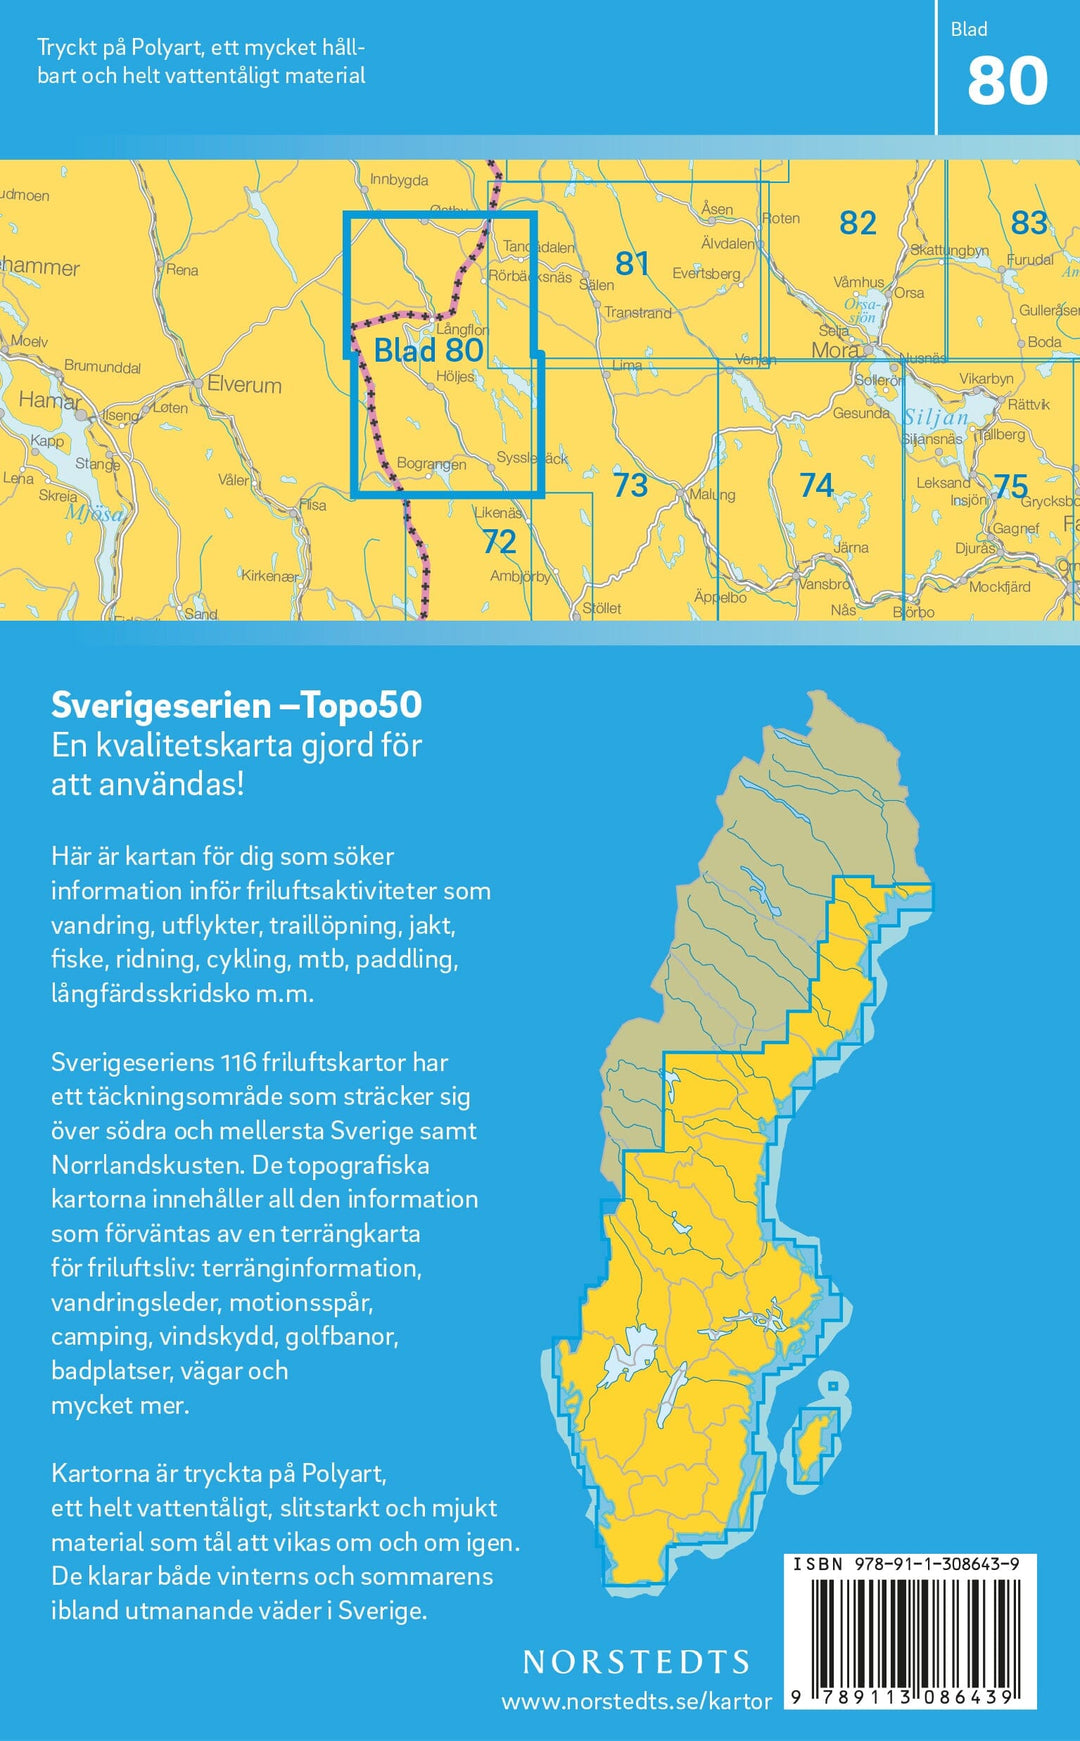 Carte topographique n° 80 - Sysslebäck (Suède) | Norstedts - Sverigeserien carte pliée Norstedts 